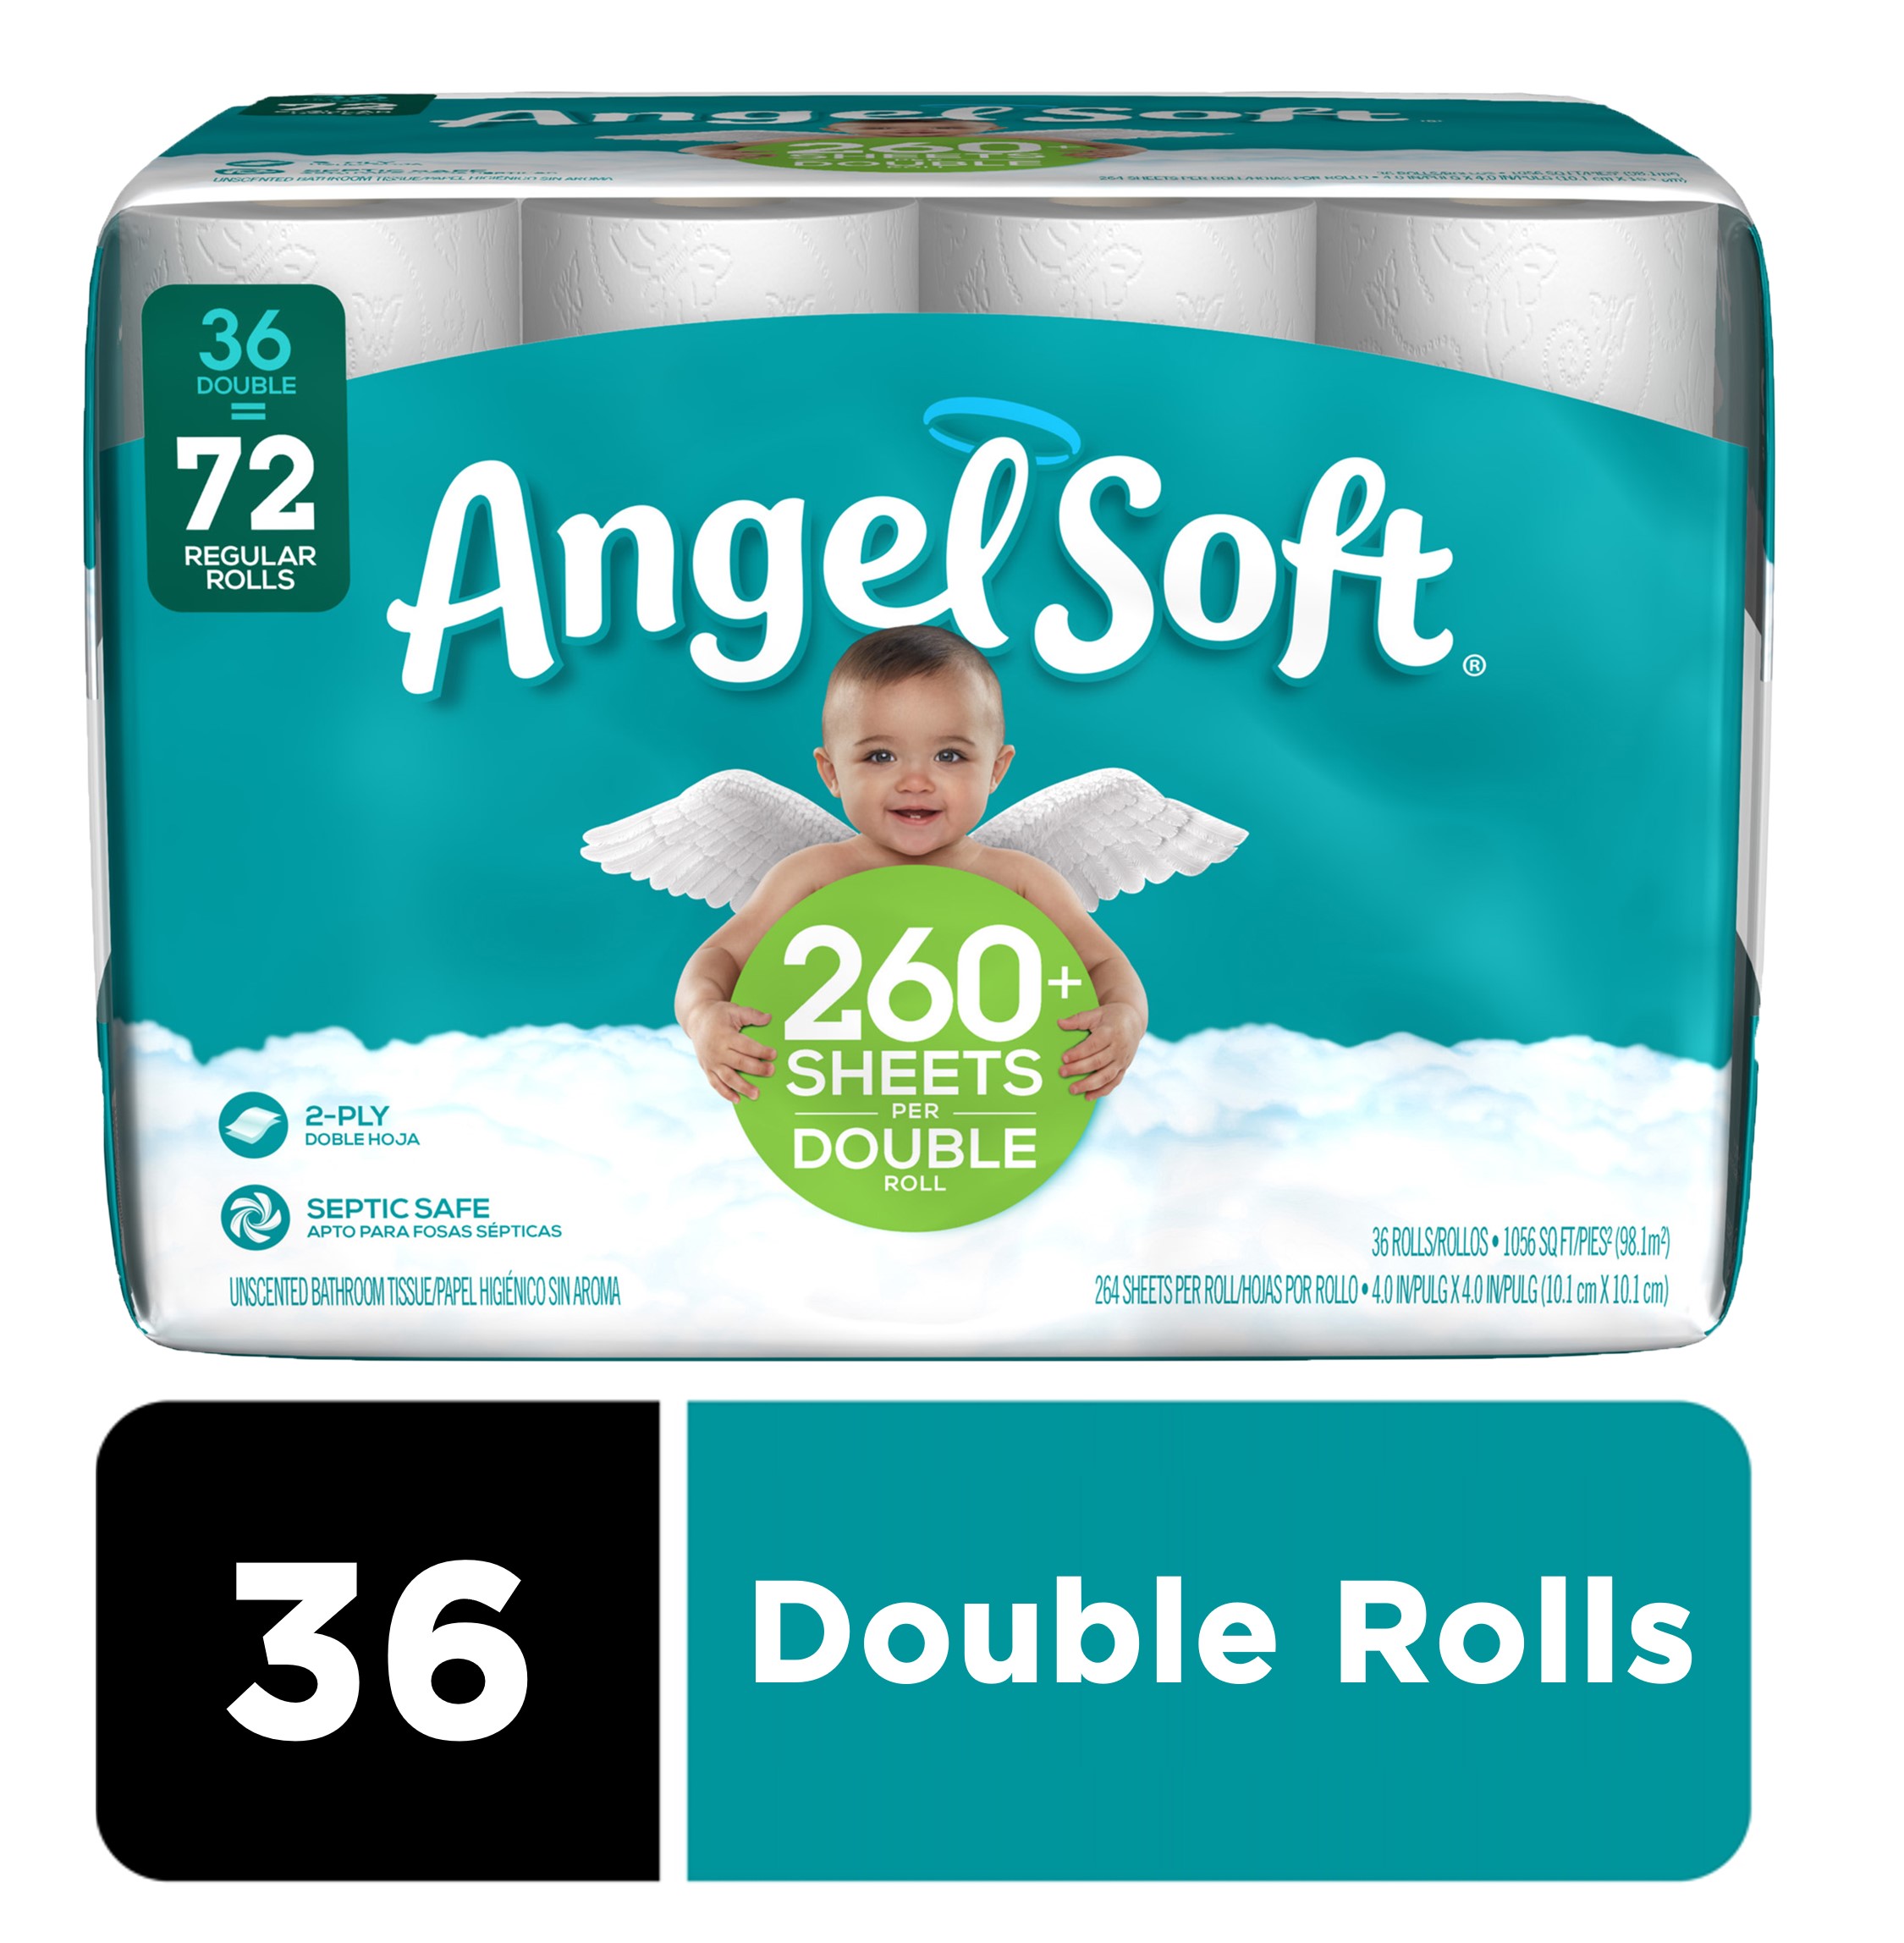 Angel Soft Toilet Paper, 36 Double Rolls (= 72 Regular Rolls) - image 1 of 12